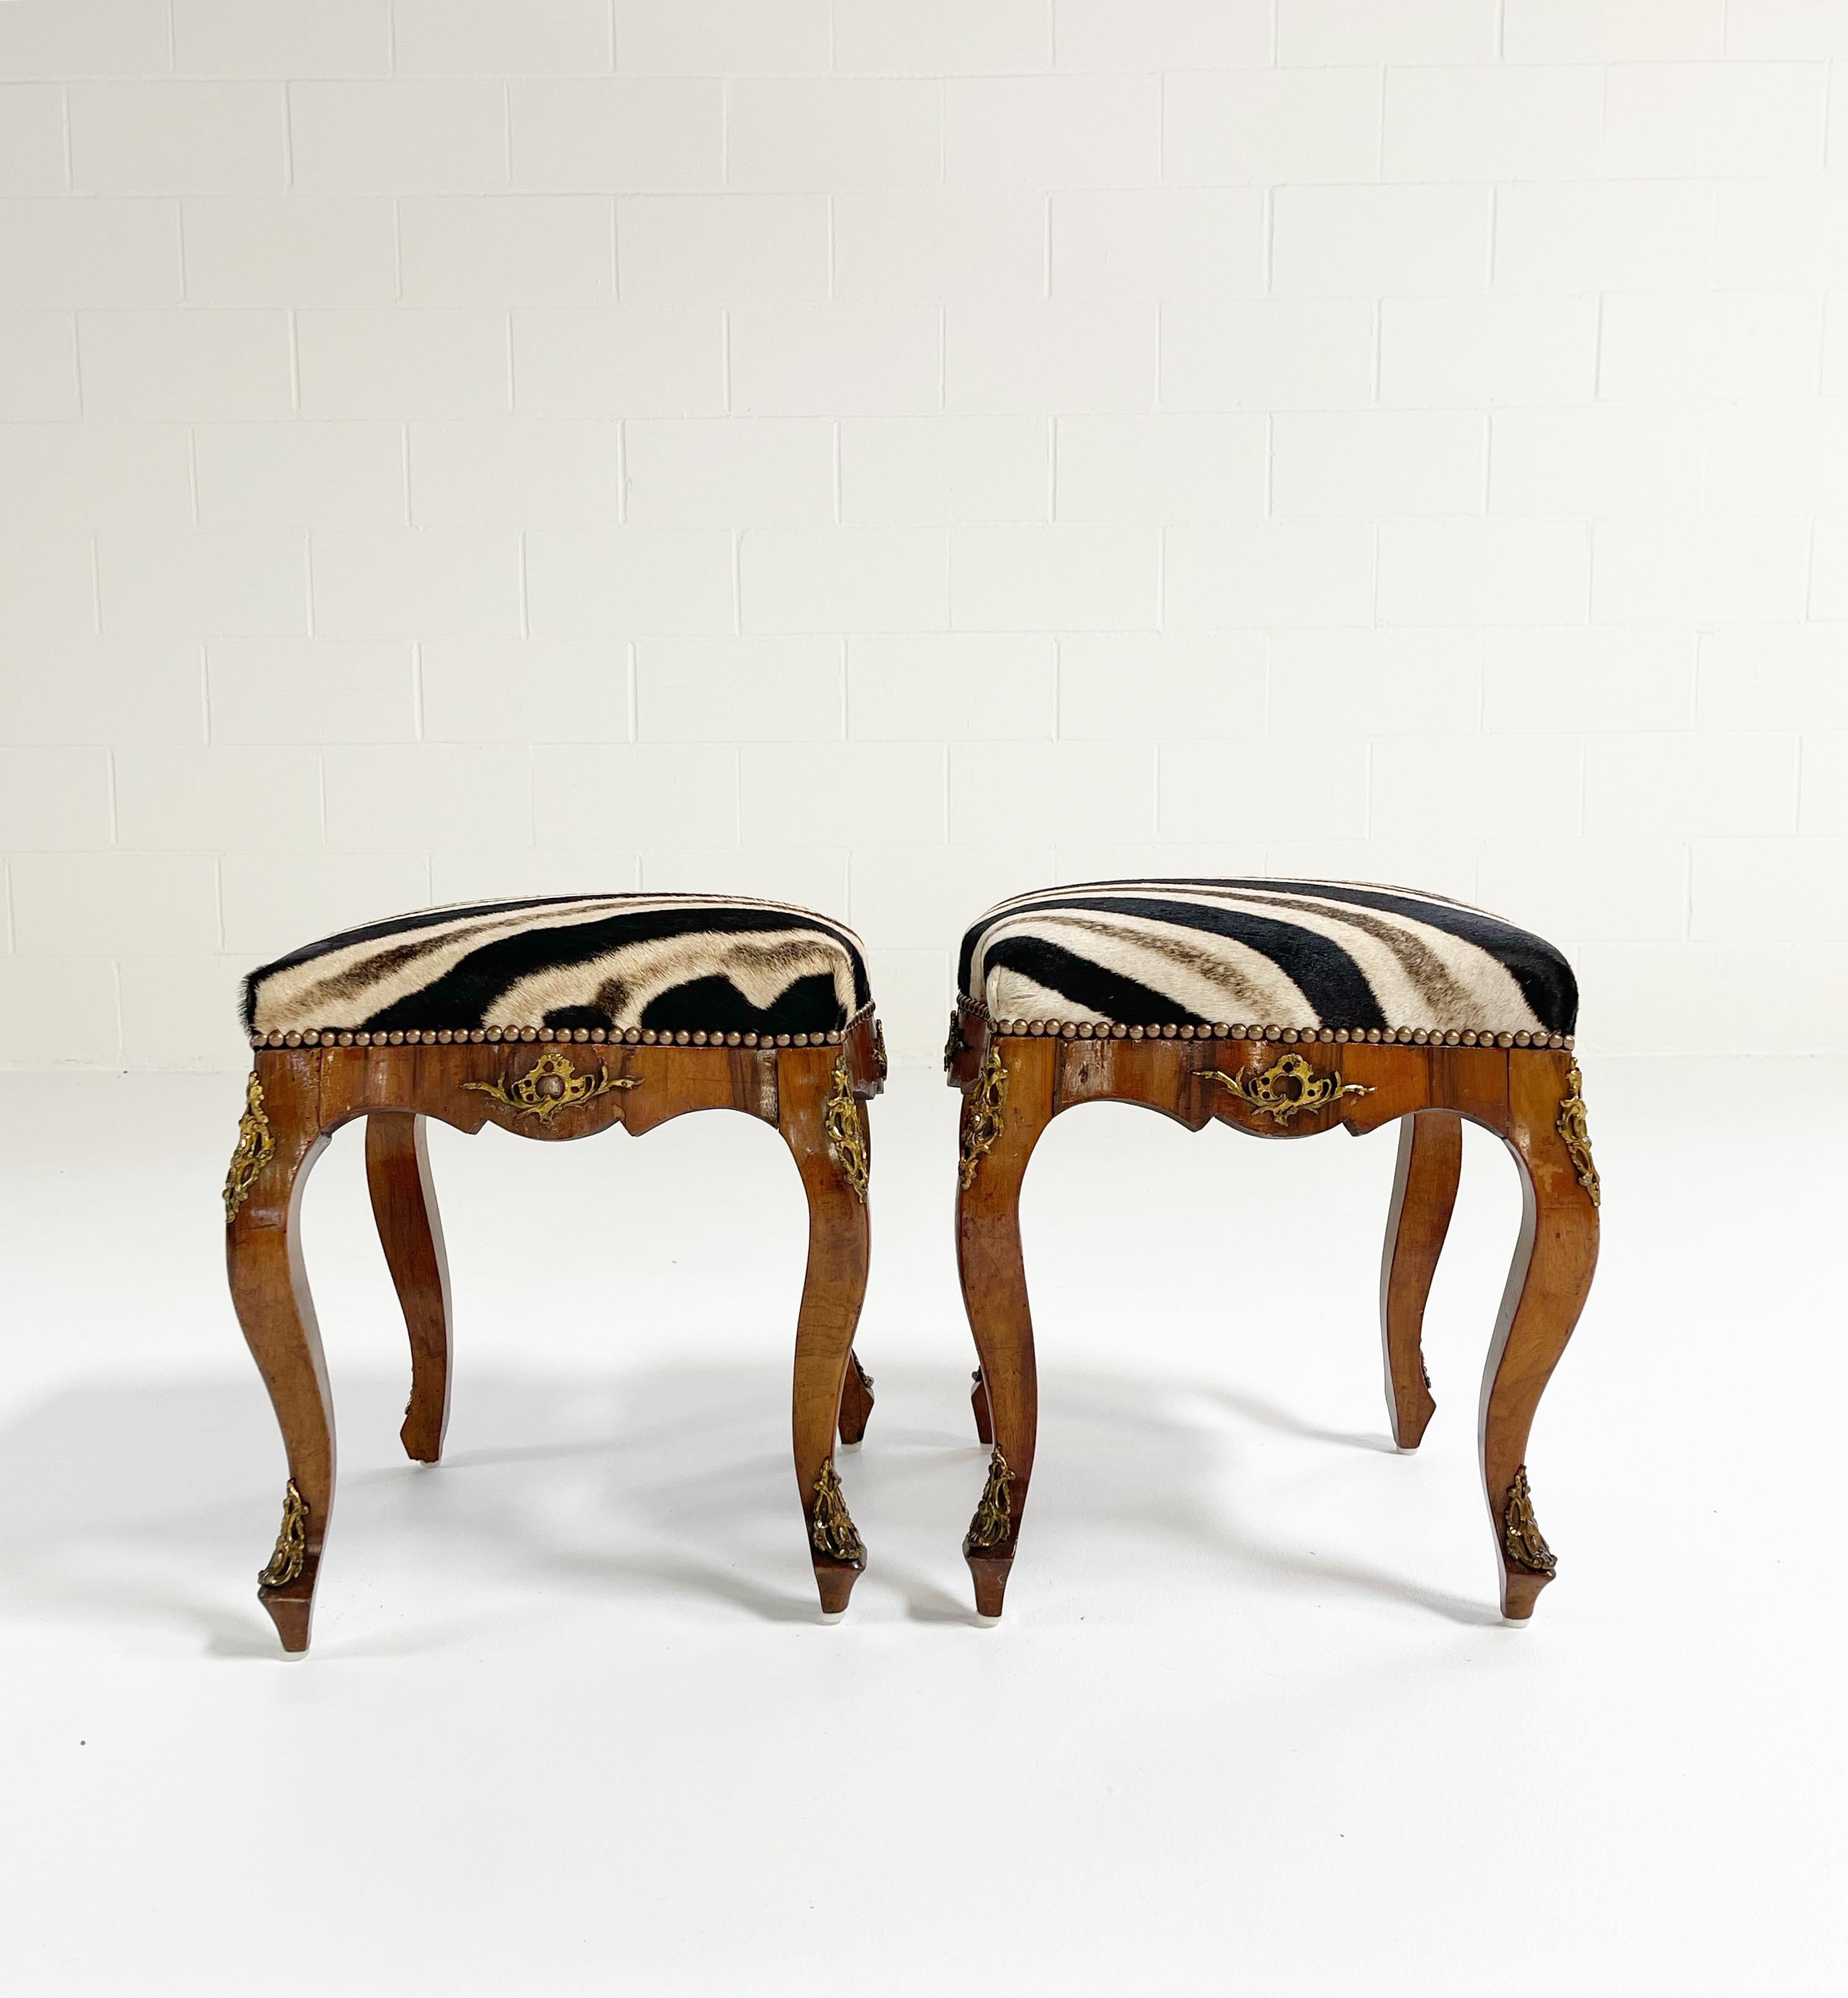 20th Century Rococo Style Tabourets in Zebra Hide, Pair